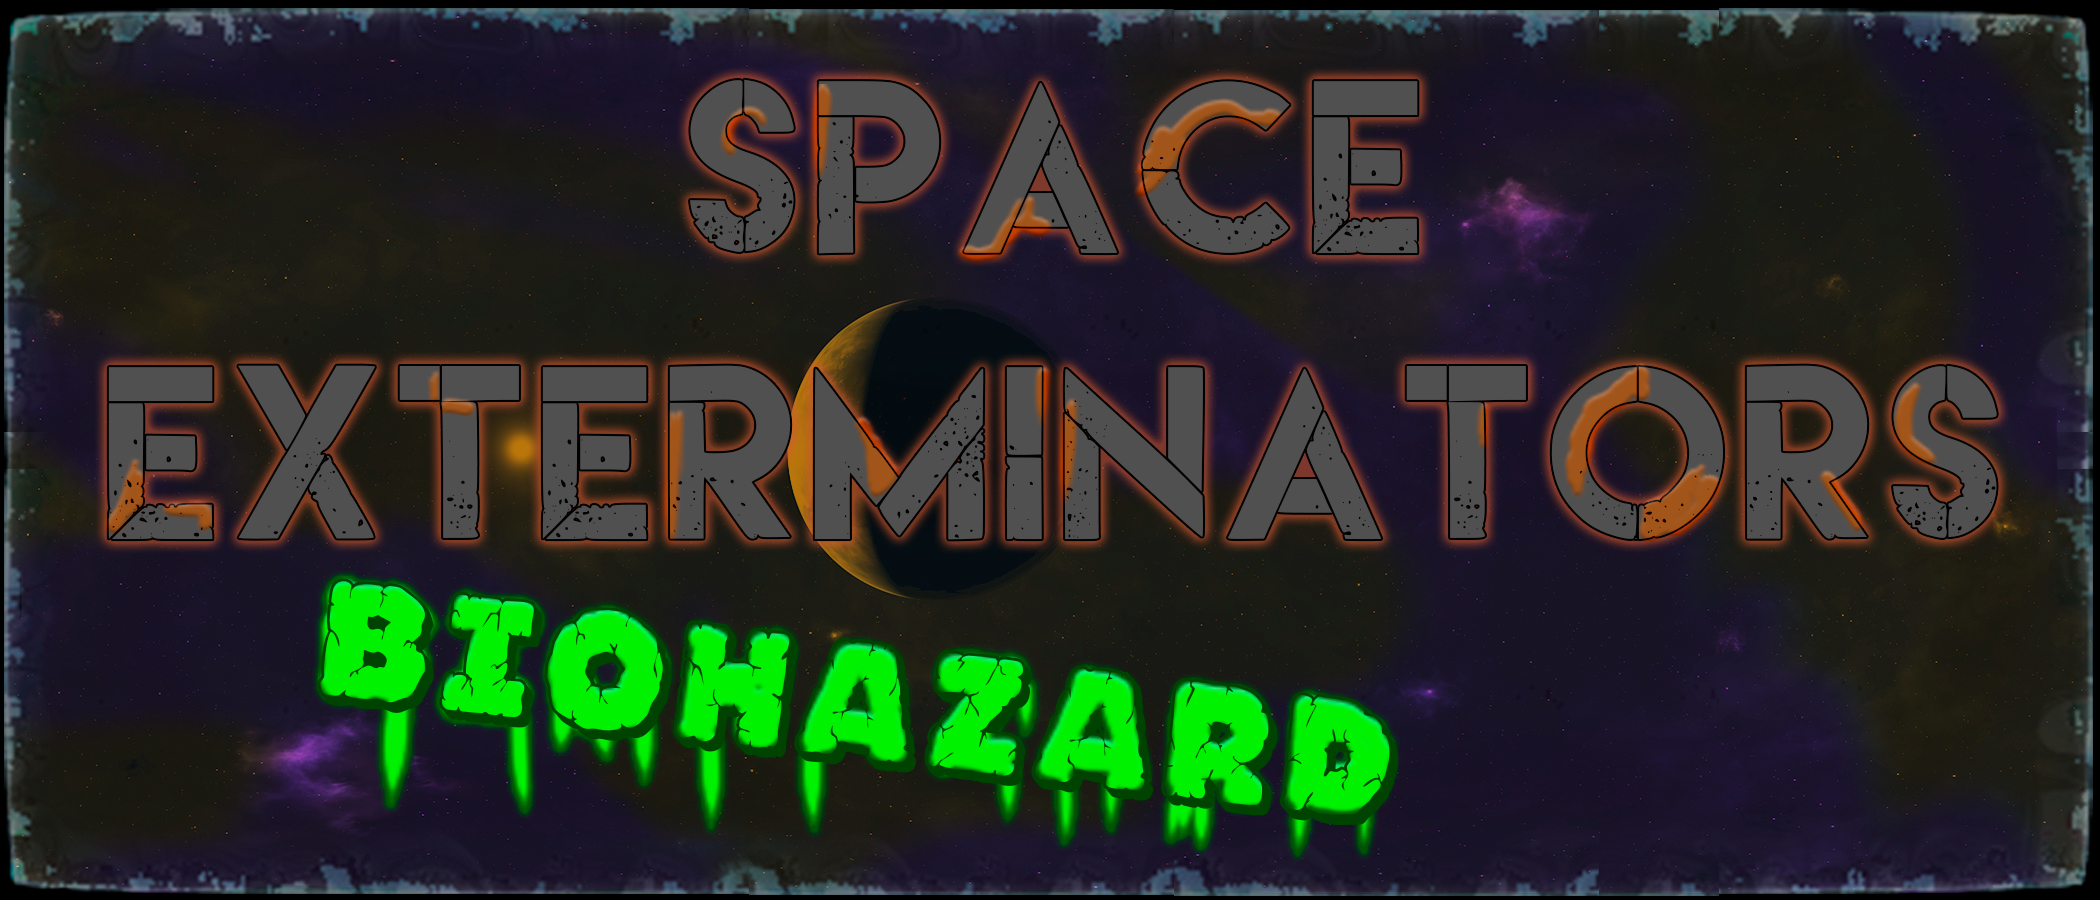 Space Exterminators